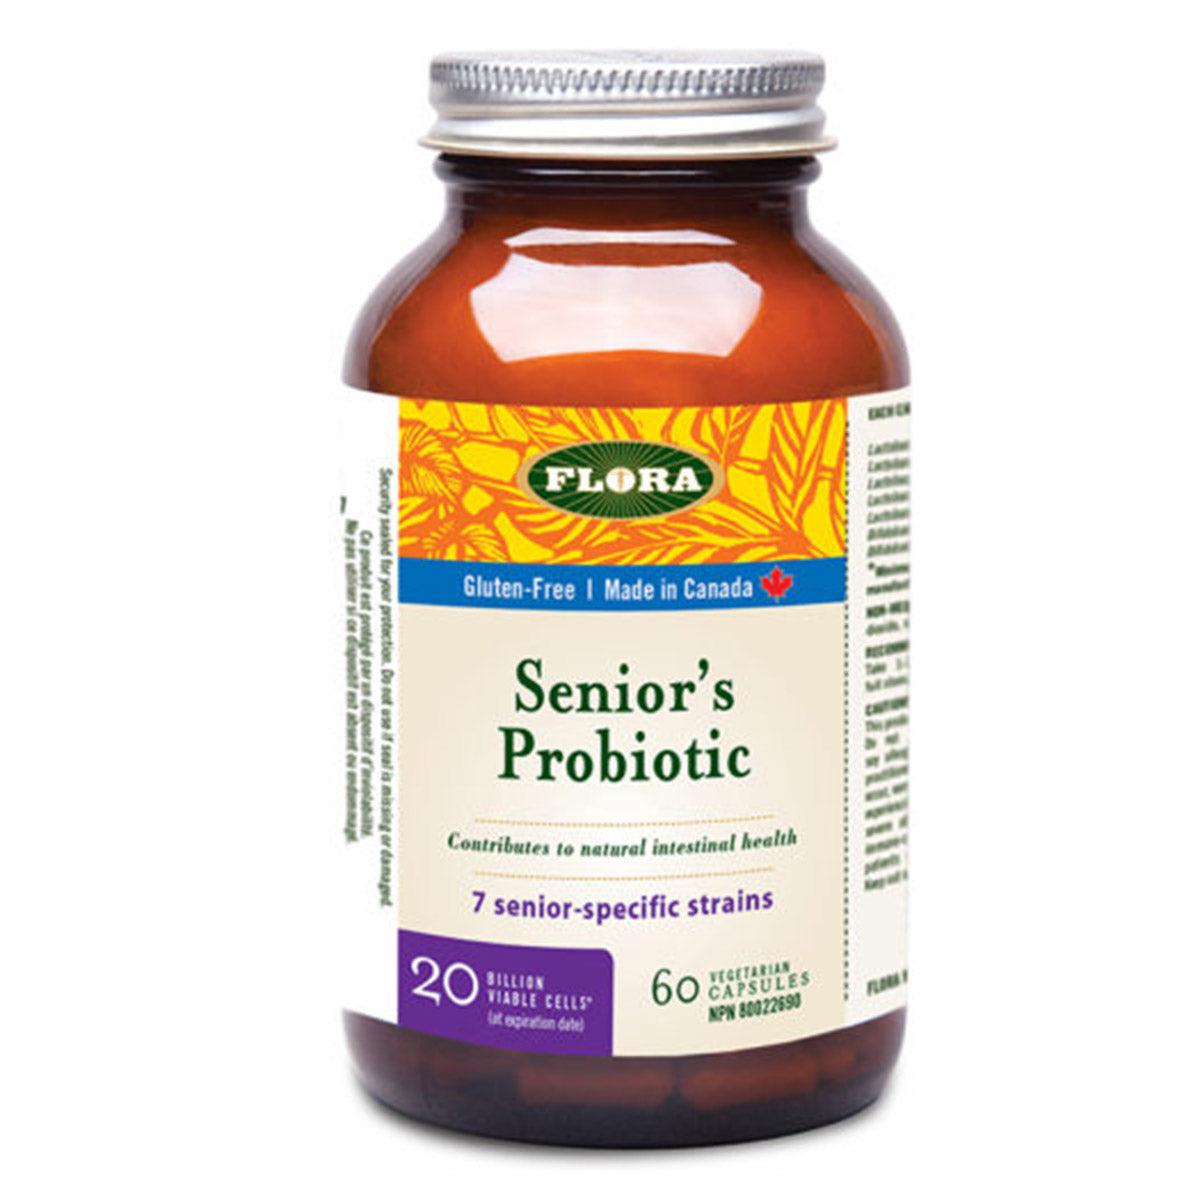 Flora Seniors Probiotic (Super Advanced Adult's Probiotic) 60 veg caps Supplements - Probiotics at Village Vitamin Store